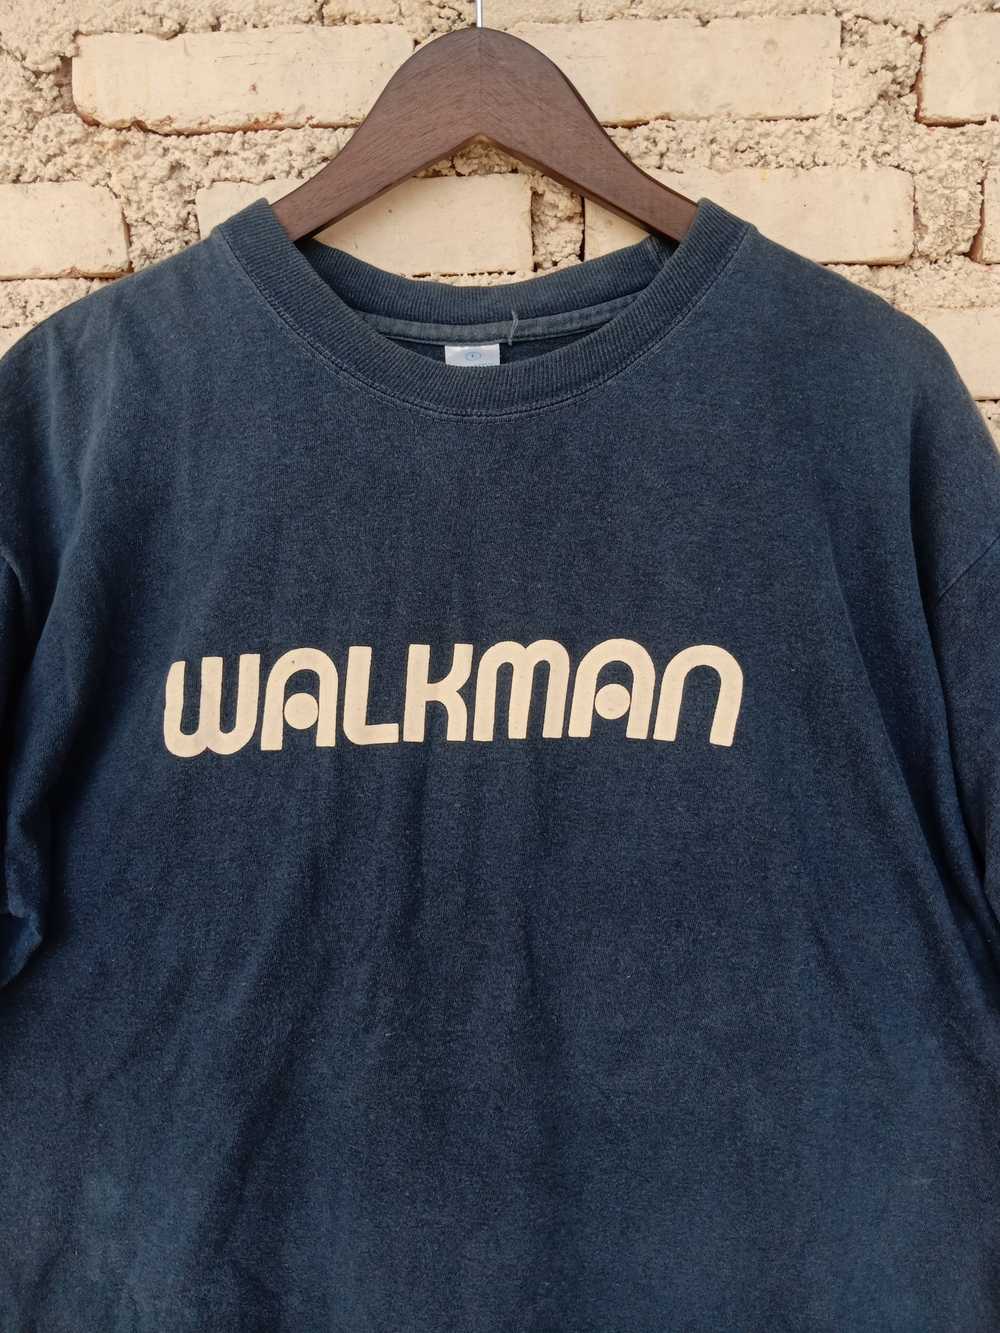 Sony × Vintage Vintage SONY Walkman promo t-shirt - image 2